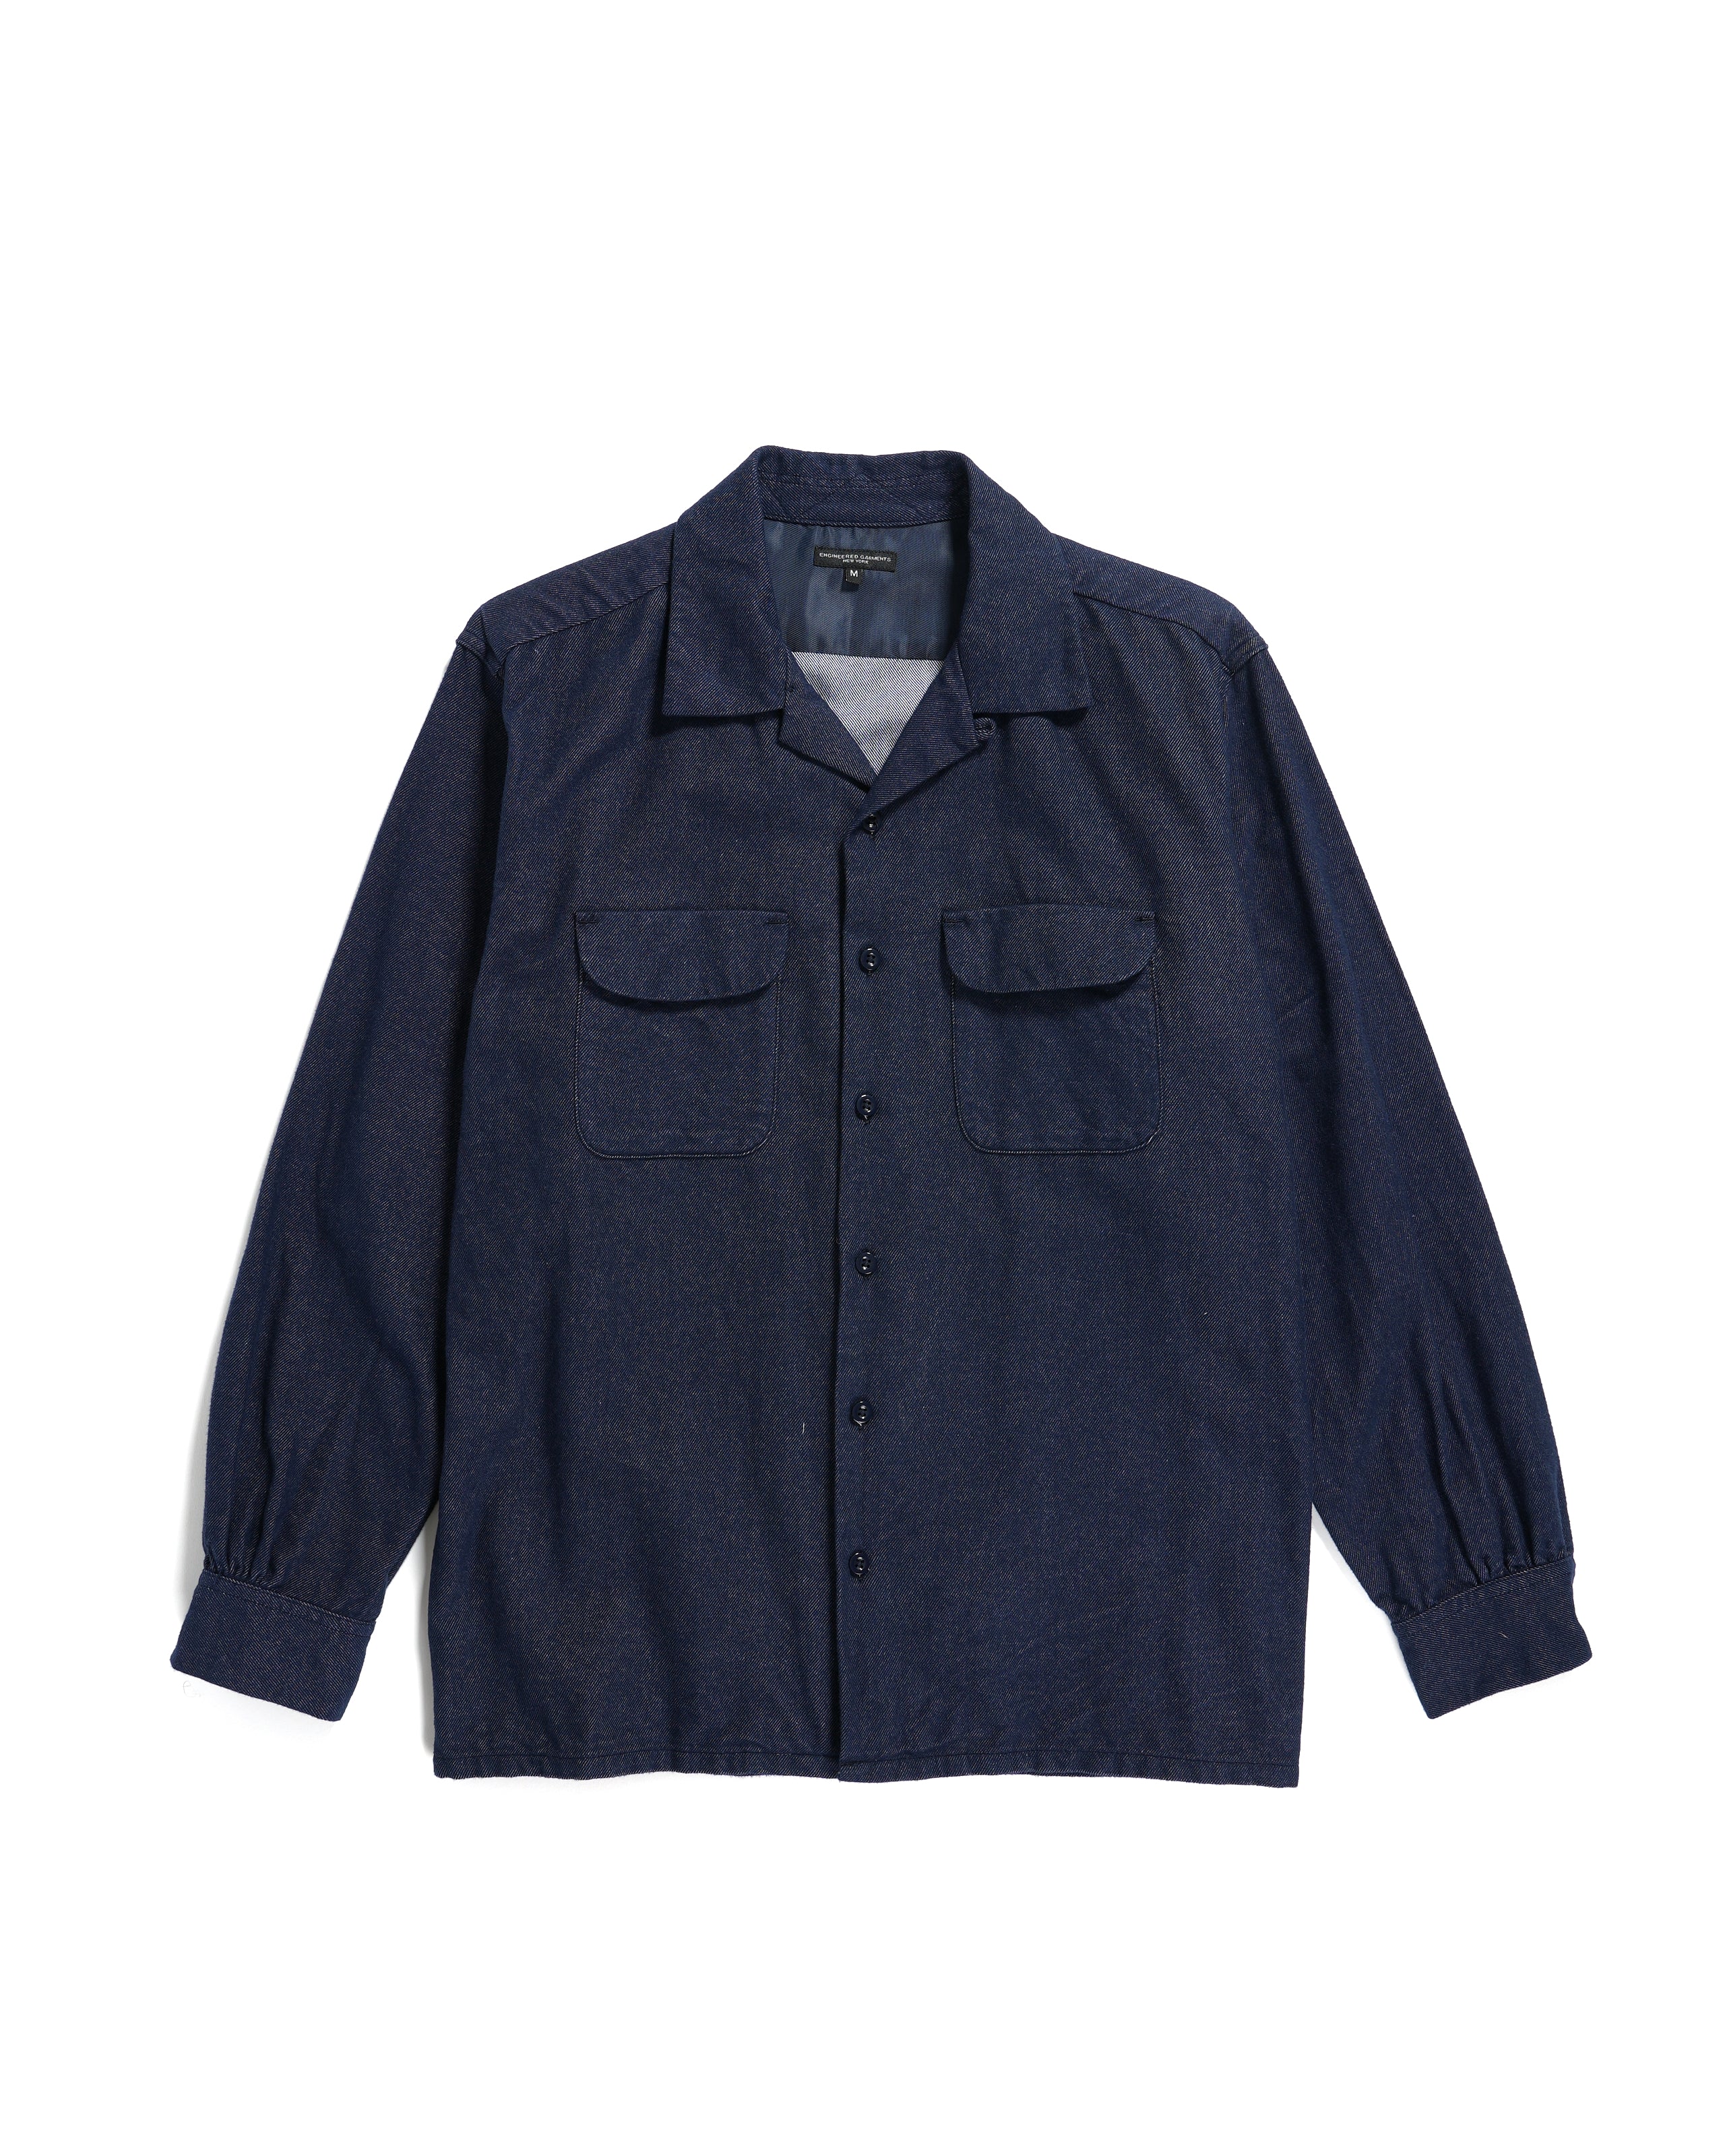 Engineered Garments Classic Shirt - Indigo Cotton Denim Flannel